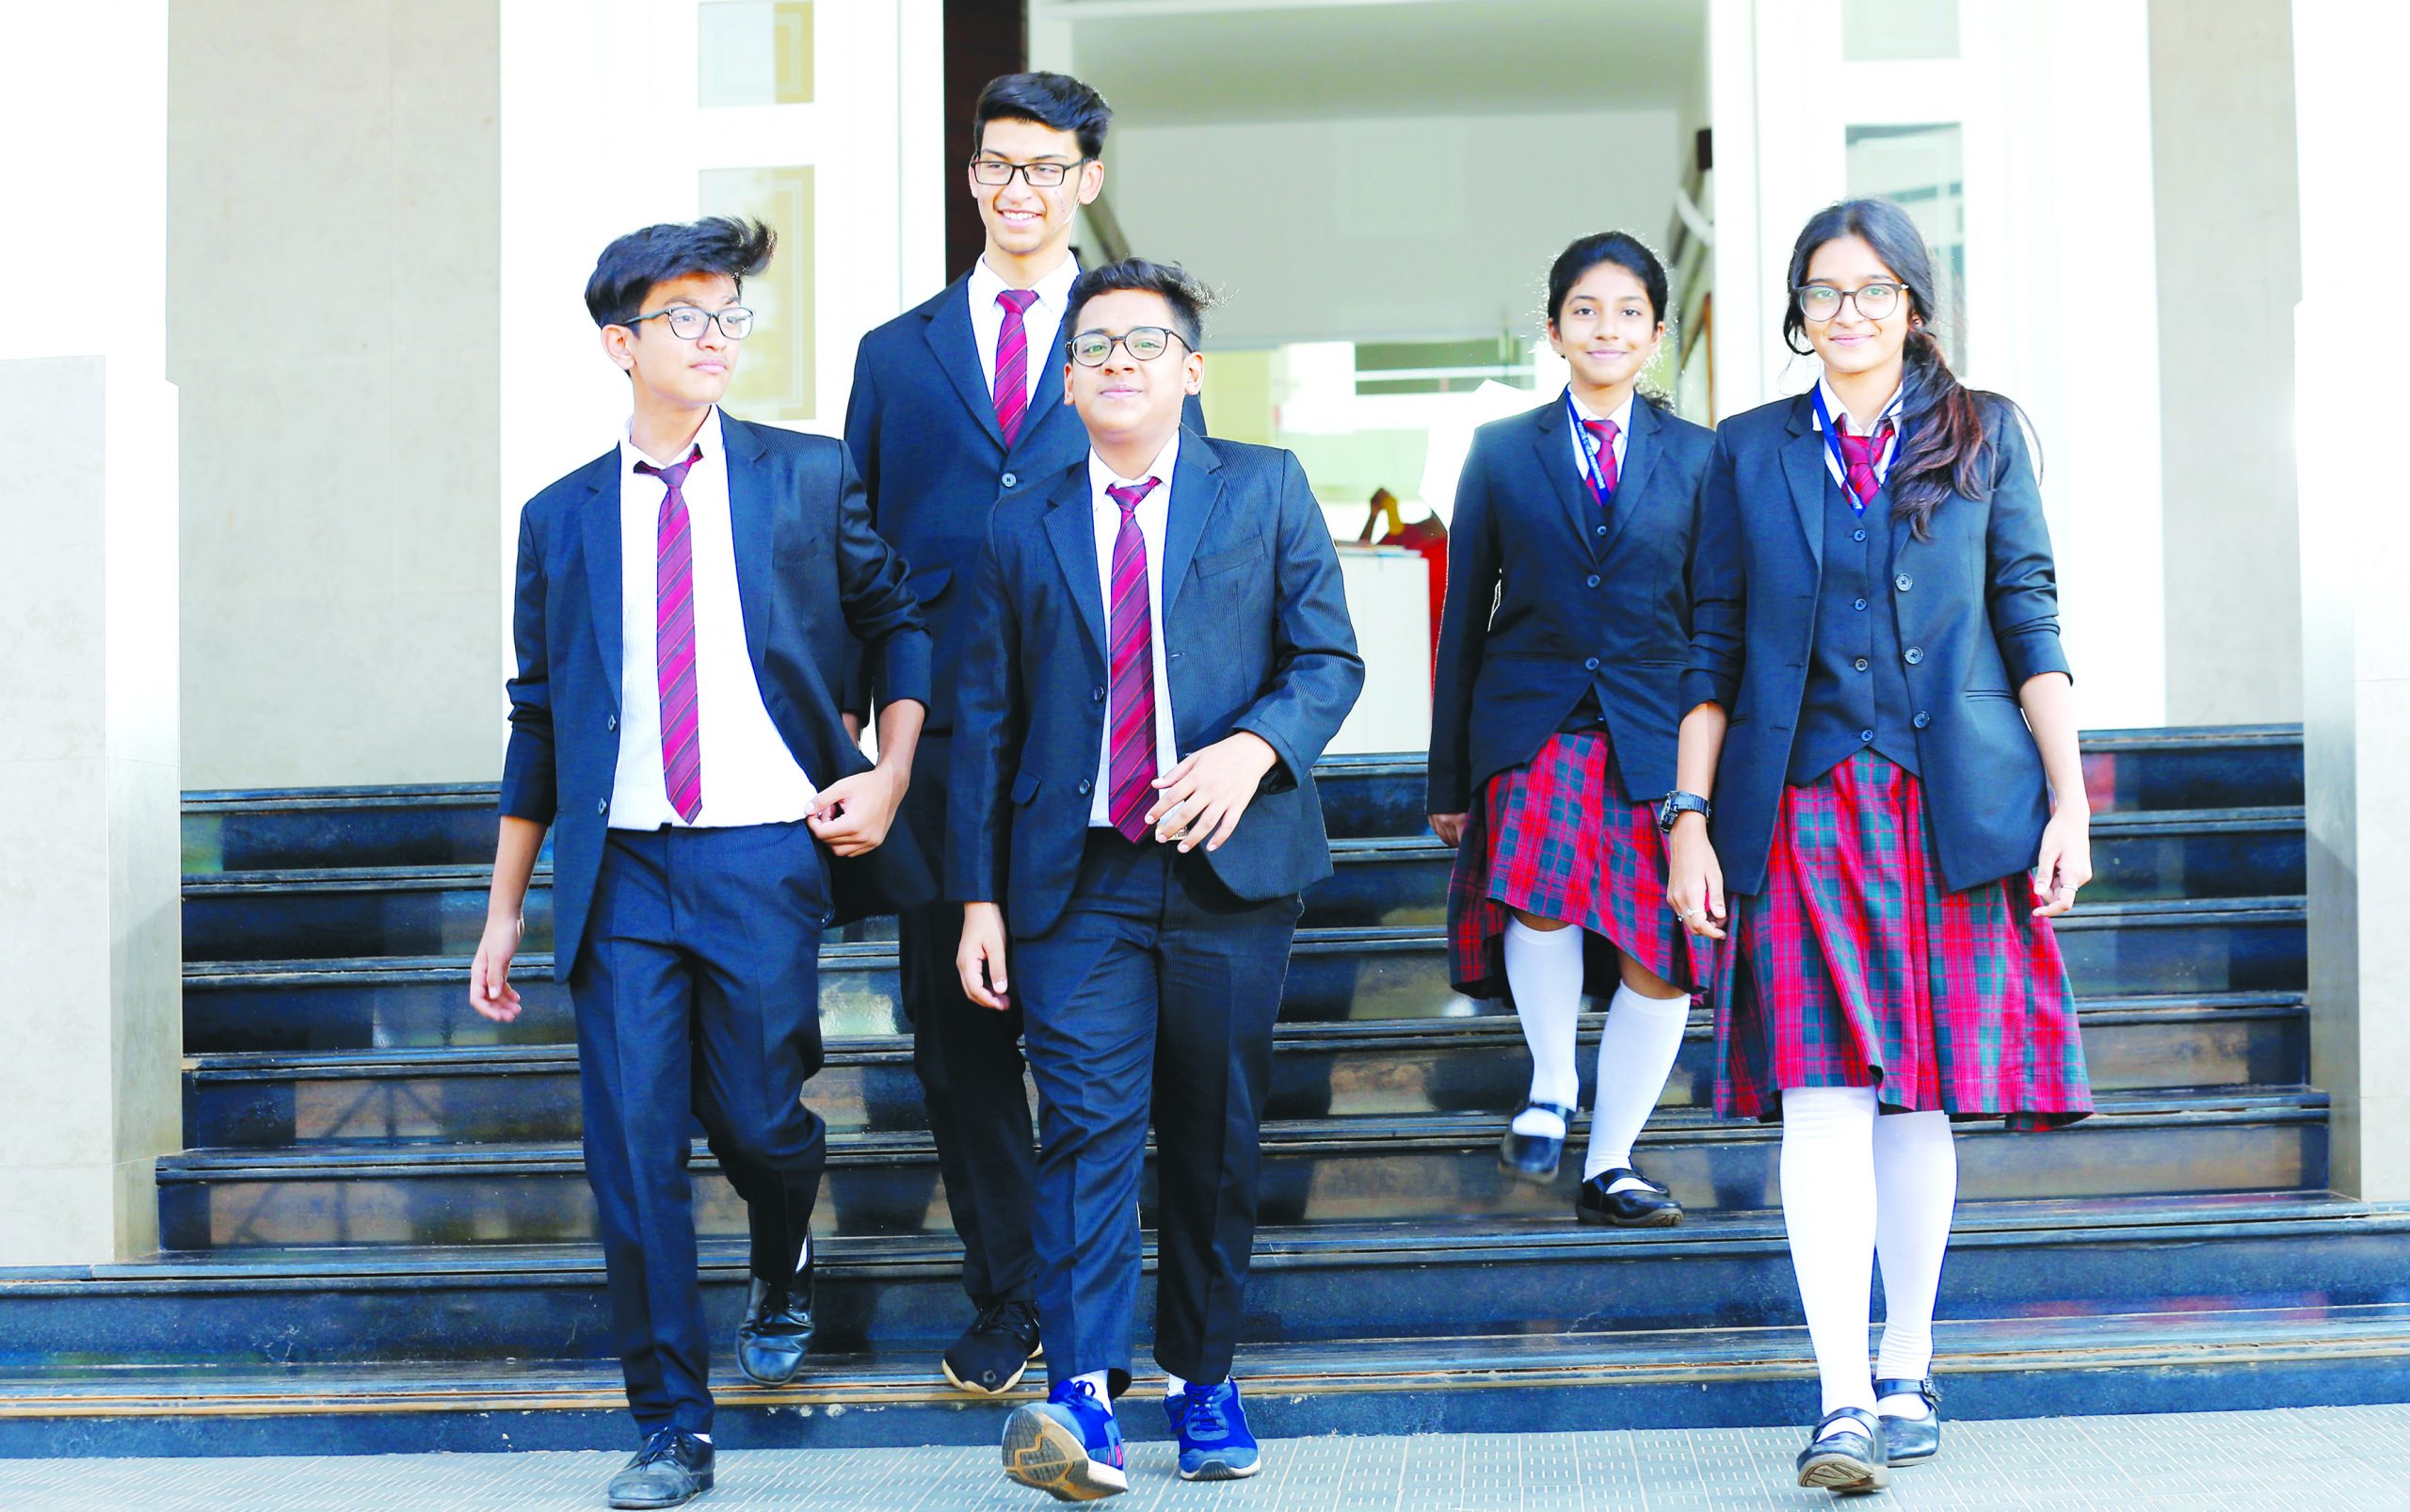 Sadhbhavana world school students